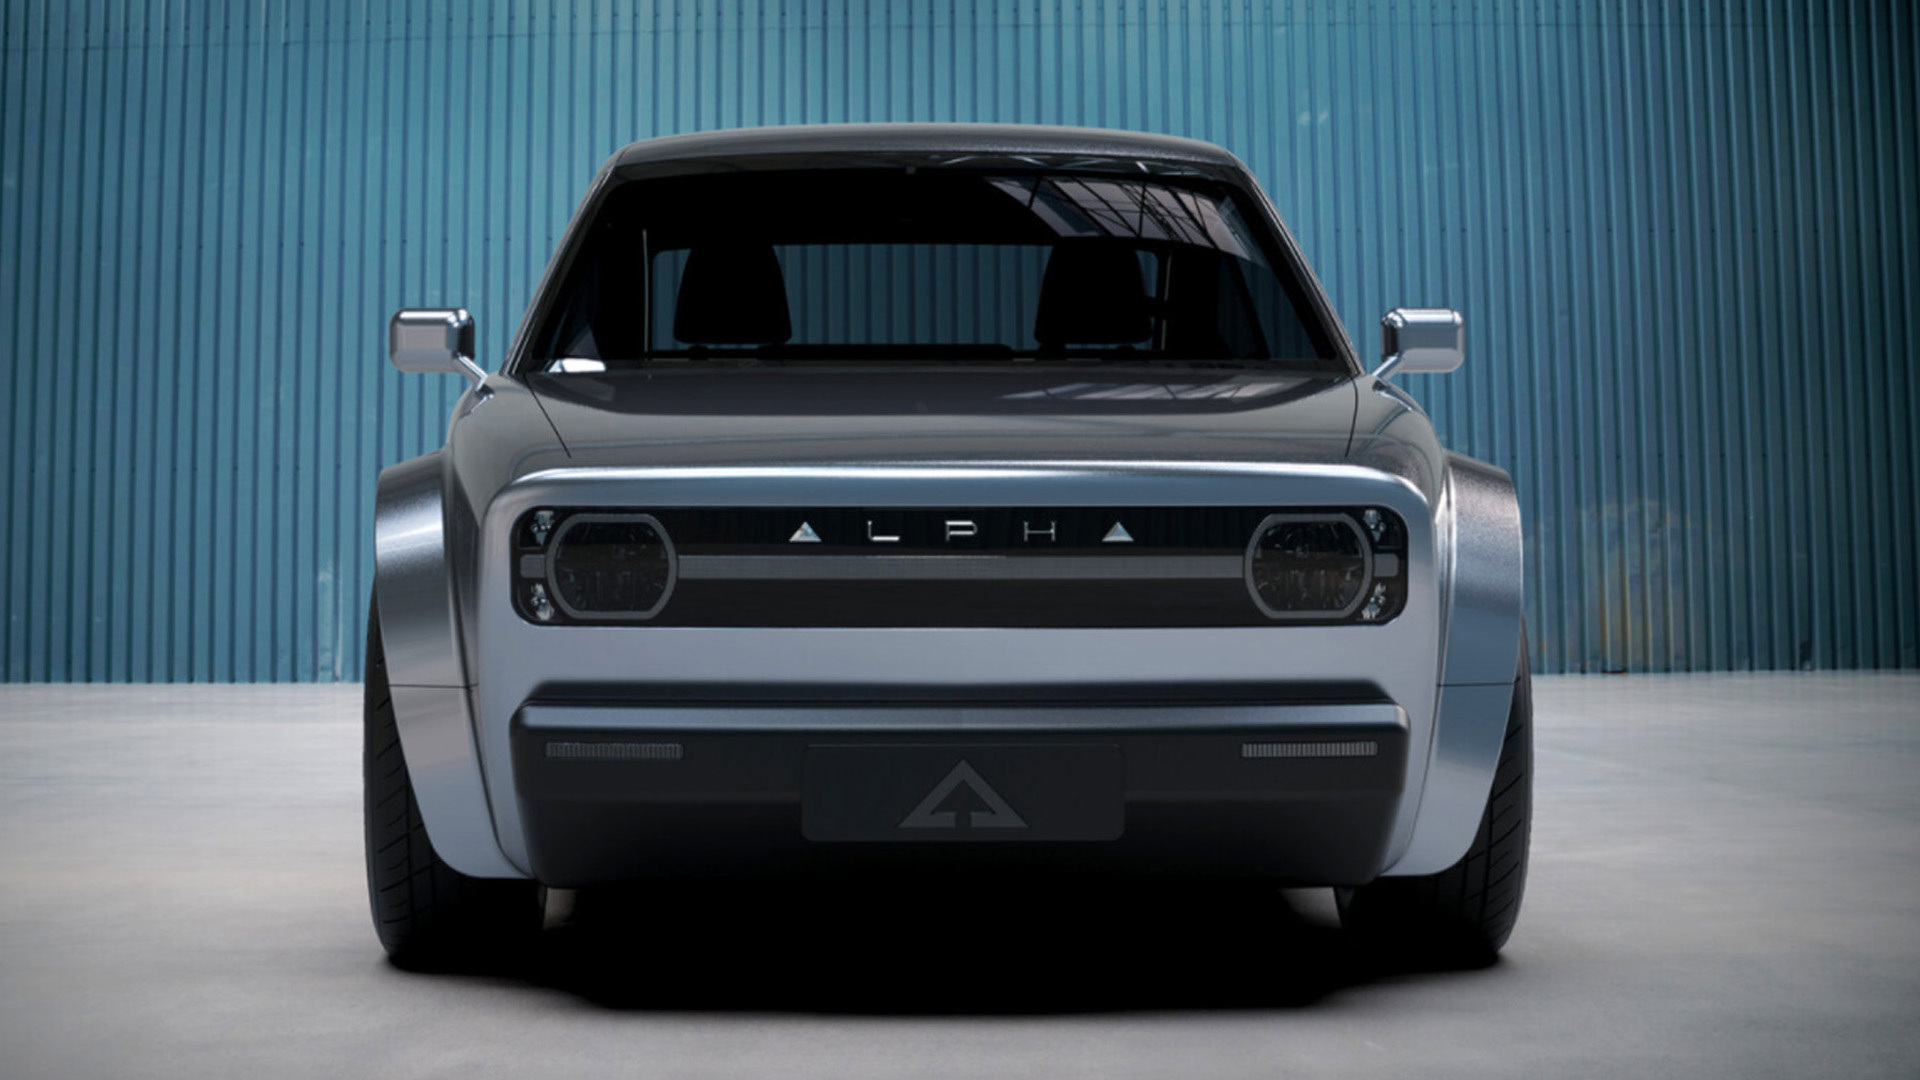 Alpha Ace (Car): Battery-driven vehicle, An old-school looking EV, Hatchback. 1920x1080 Full HD Wallpaper.